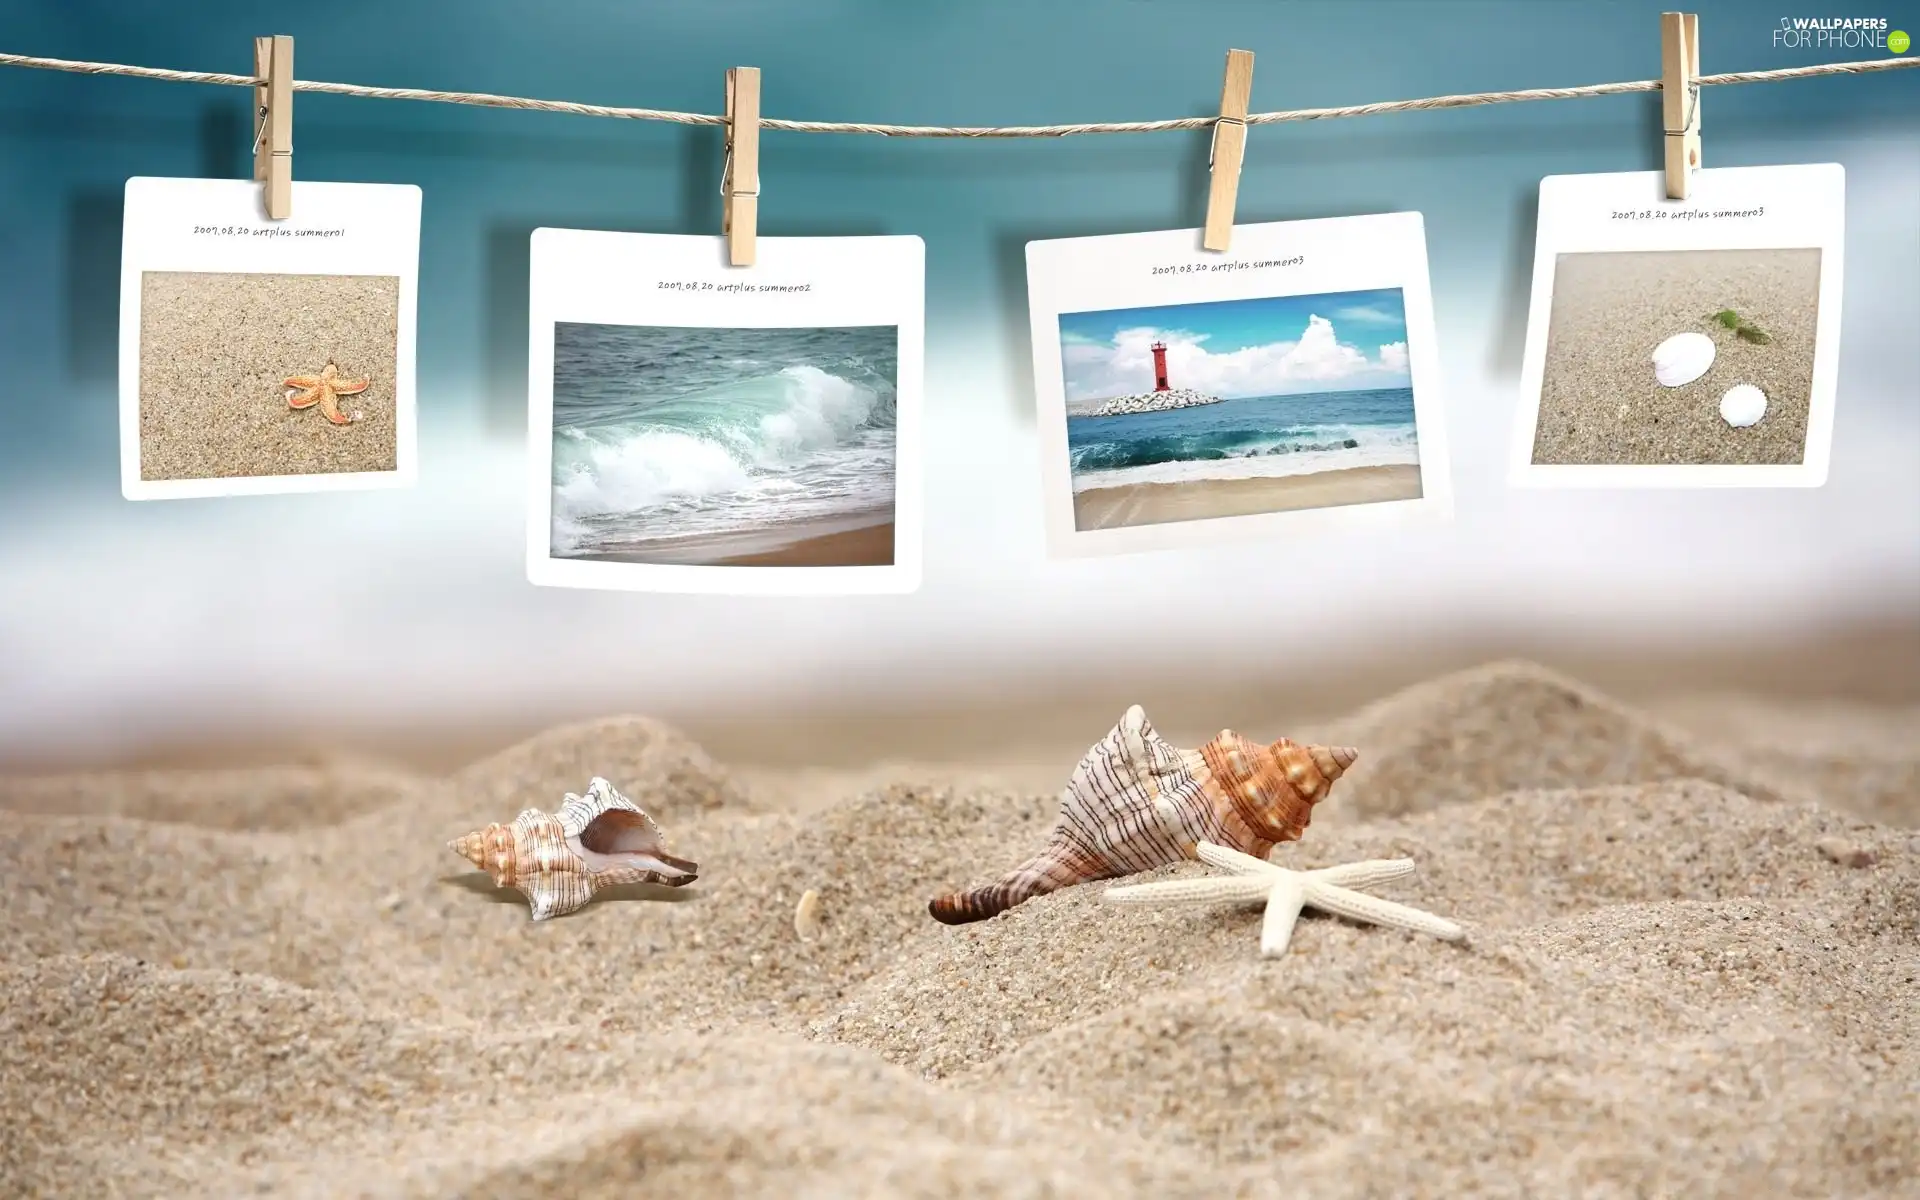 Beaches, Sand, postcards, Shells